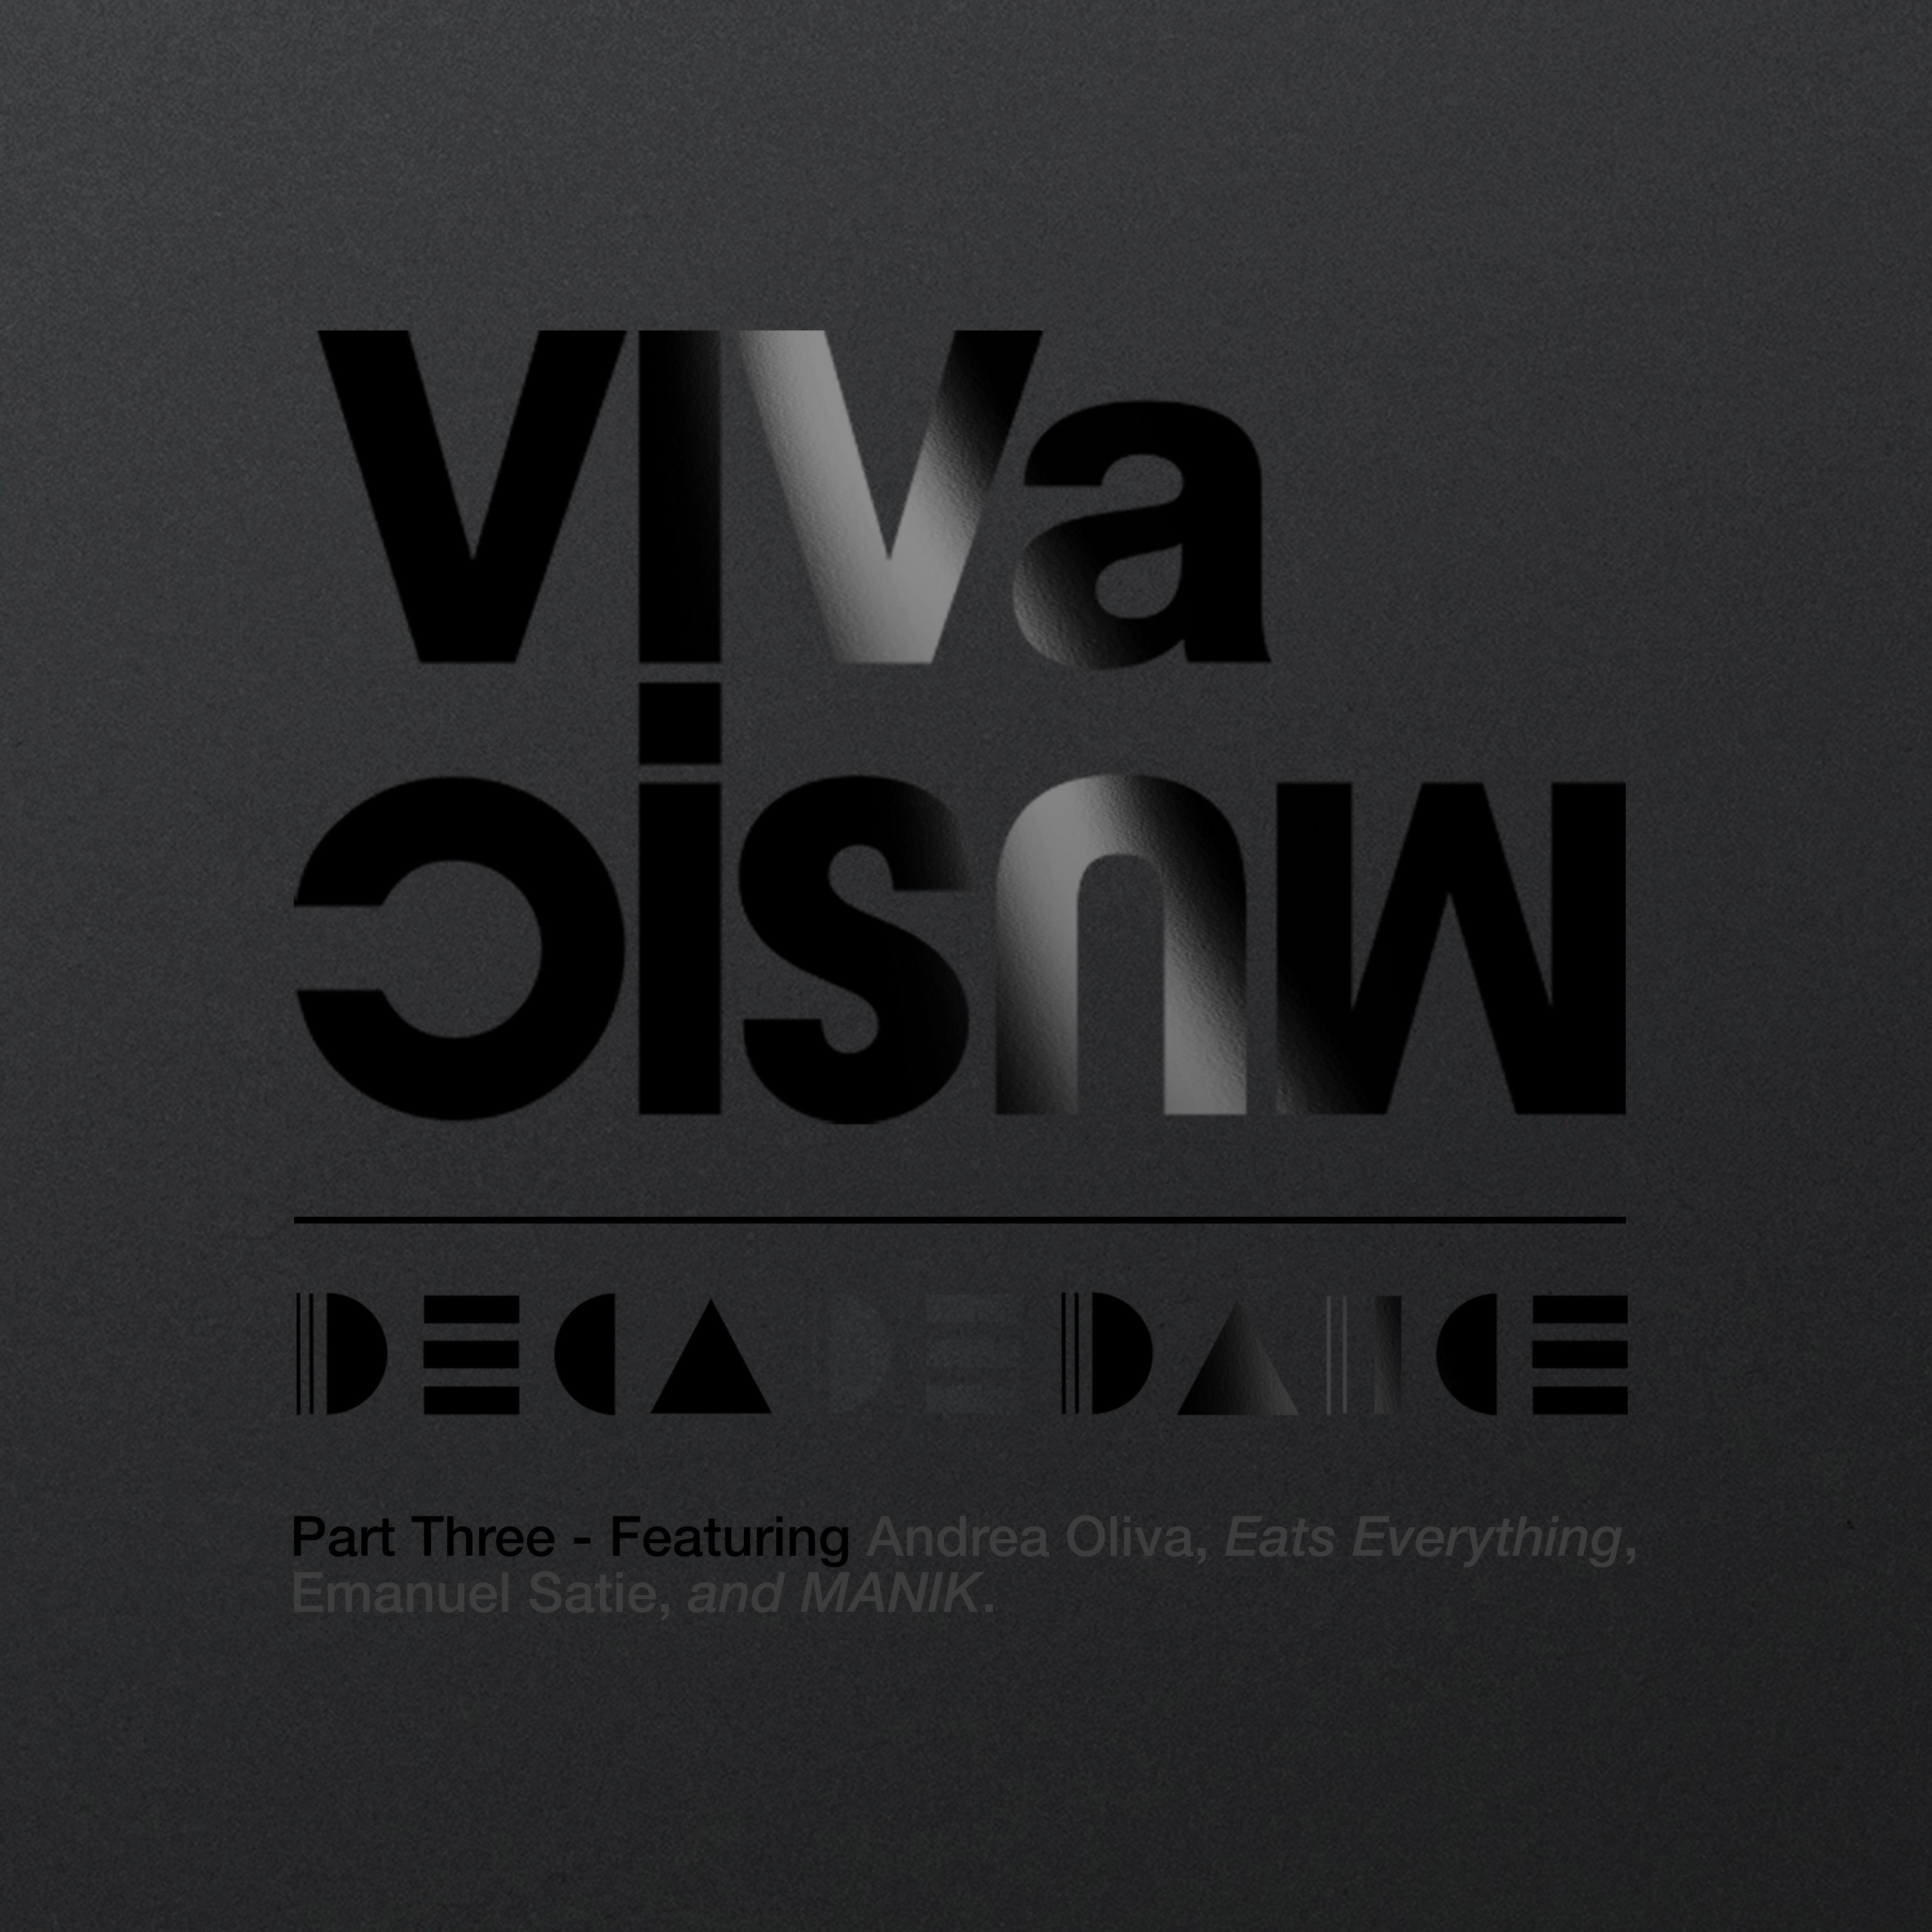 10 Years of VIVa MUSiC: Decadedance Part Three